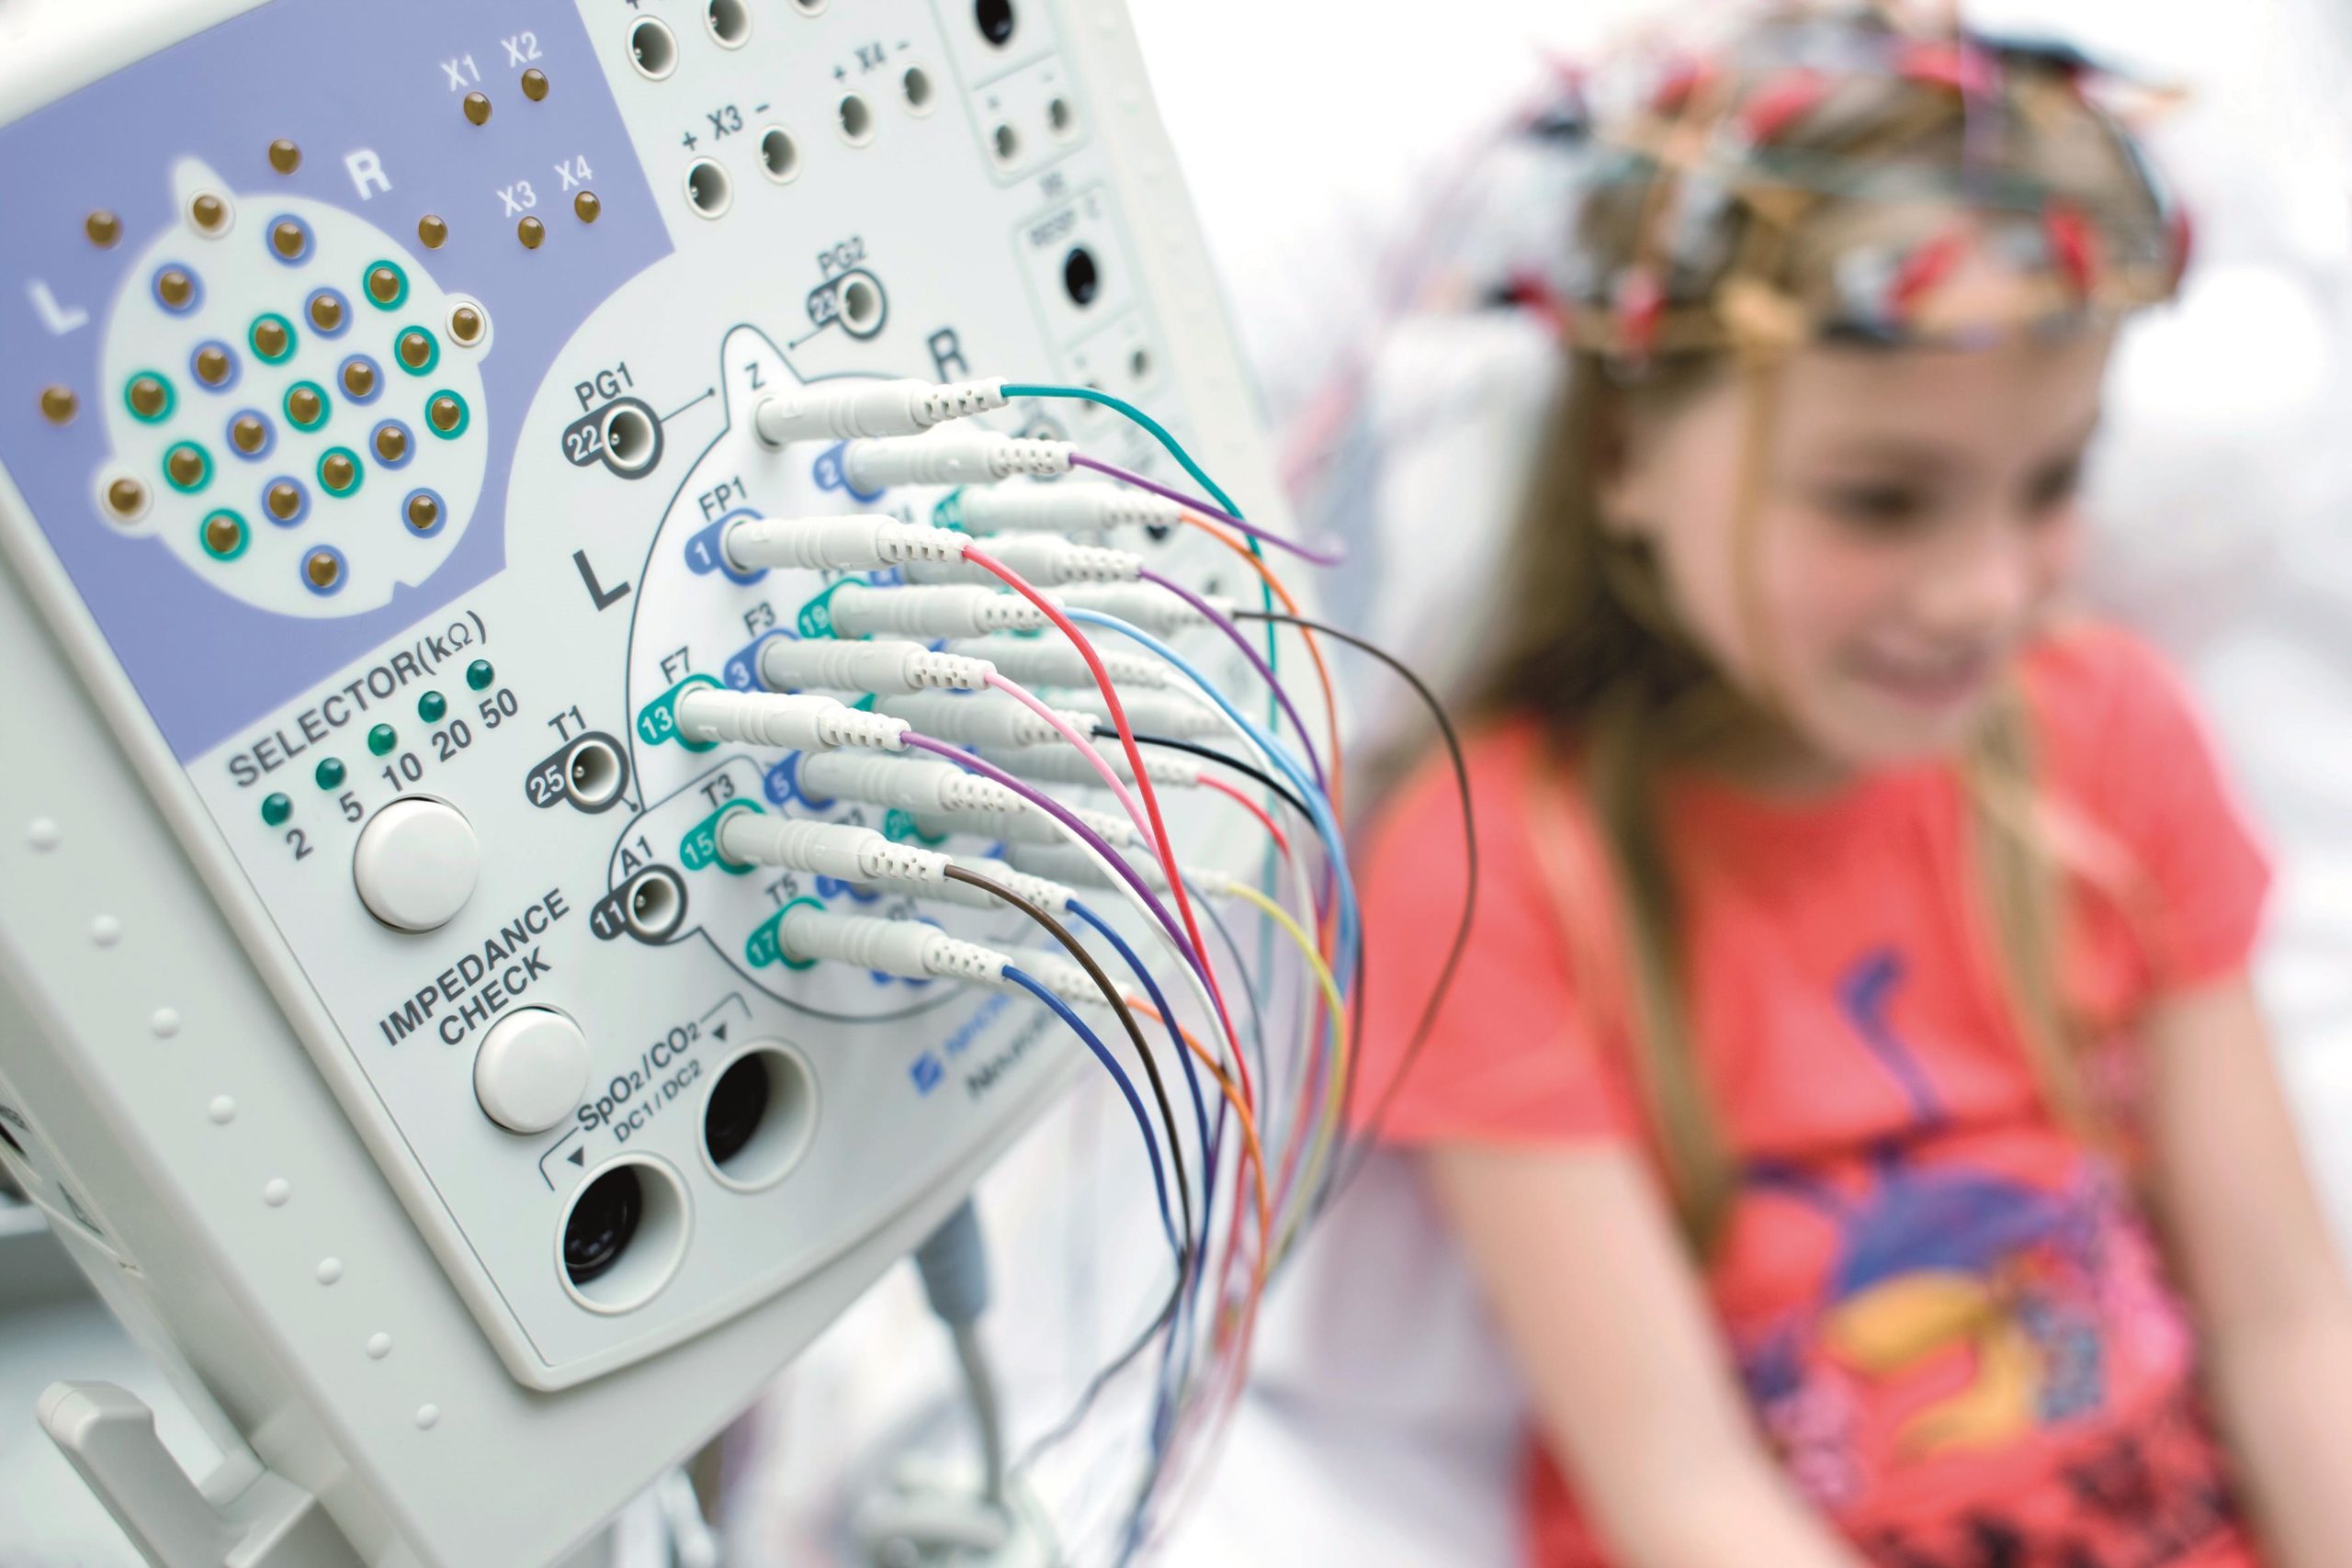 Ээг невролог. Электроэнцефалография (ЭЭГ). Энцефалография (ЭЭГ). ЭЭГ мониторинг головного мозга. ЭЭГ мониторинг сна у детей.